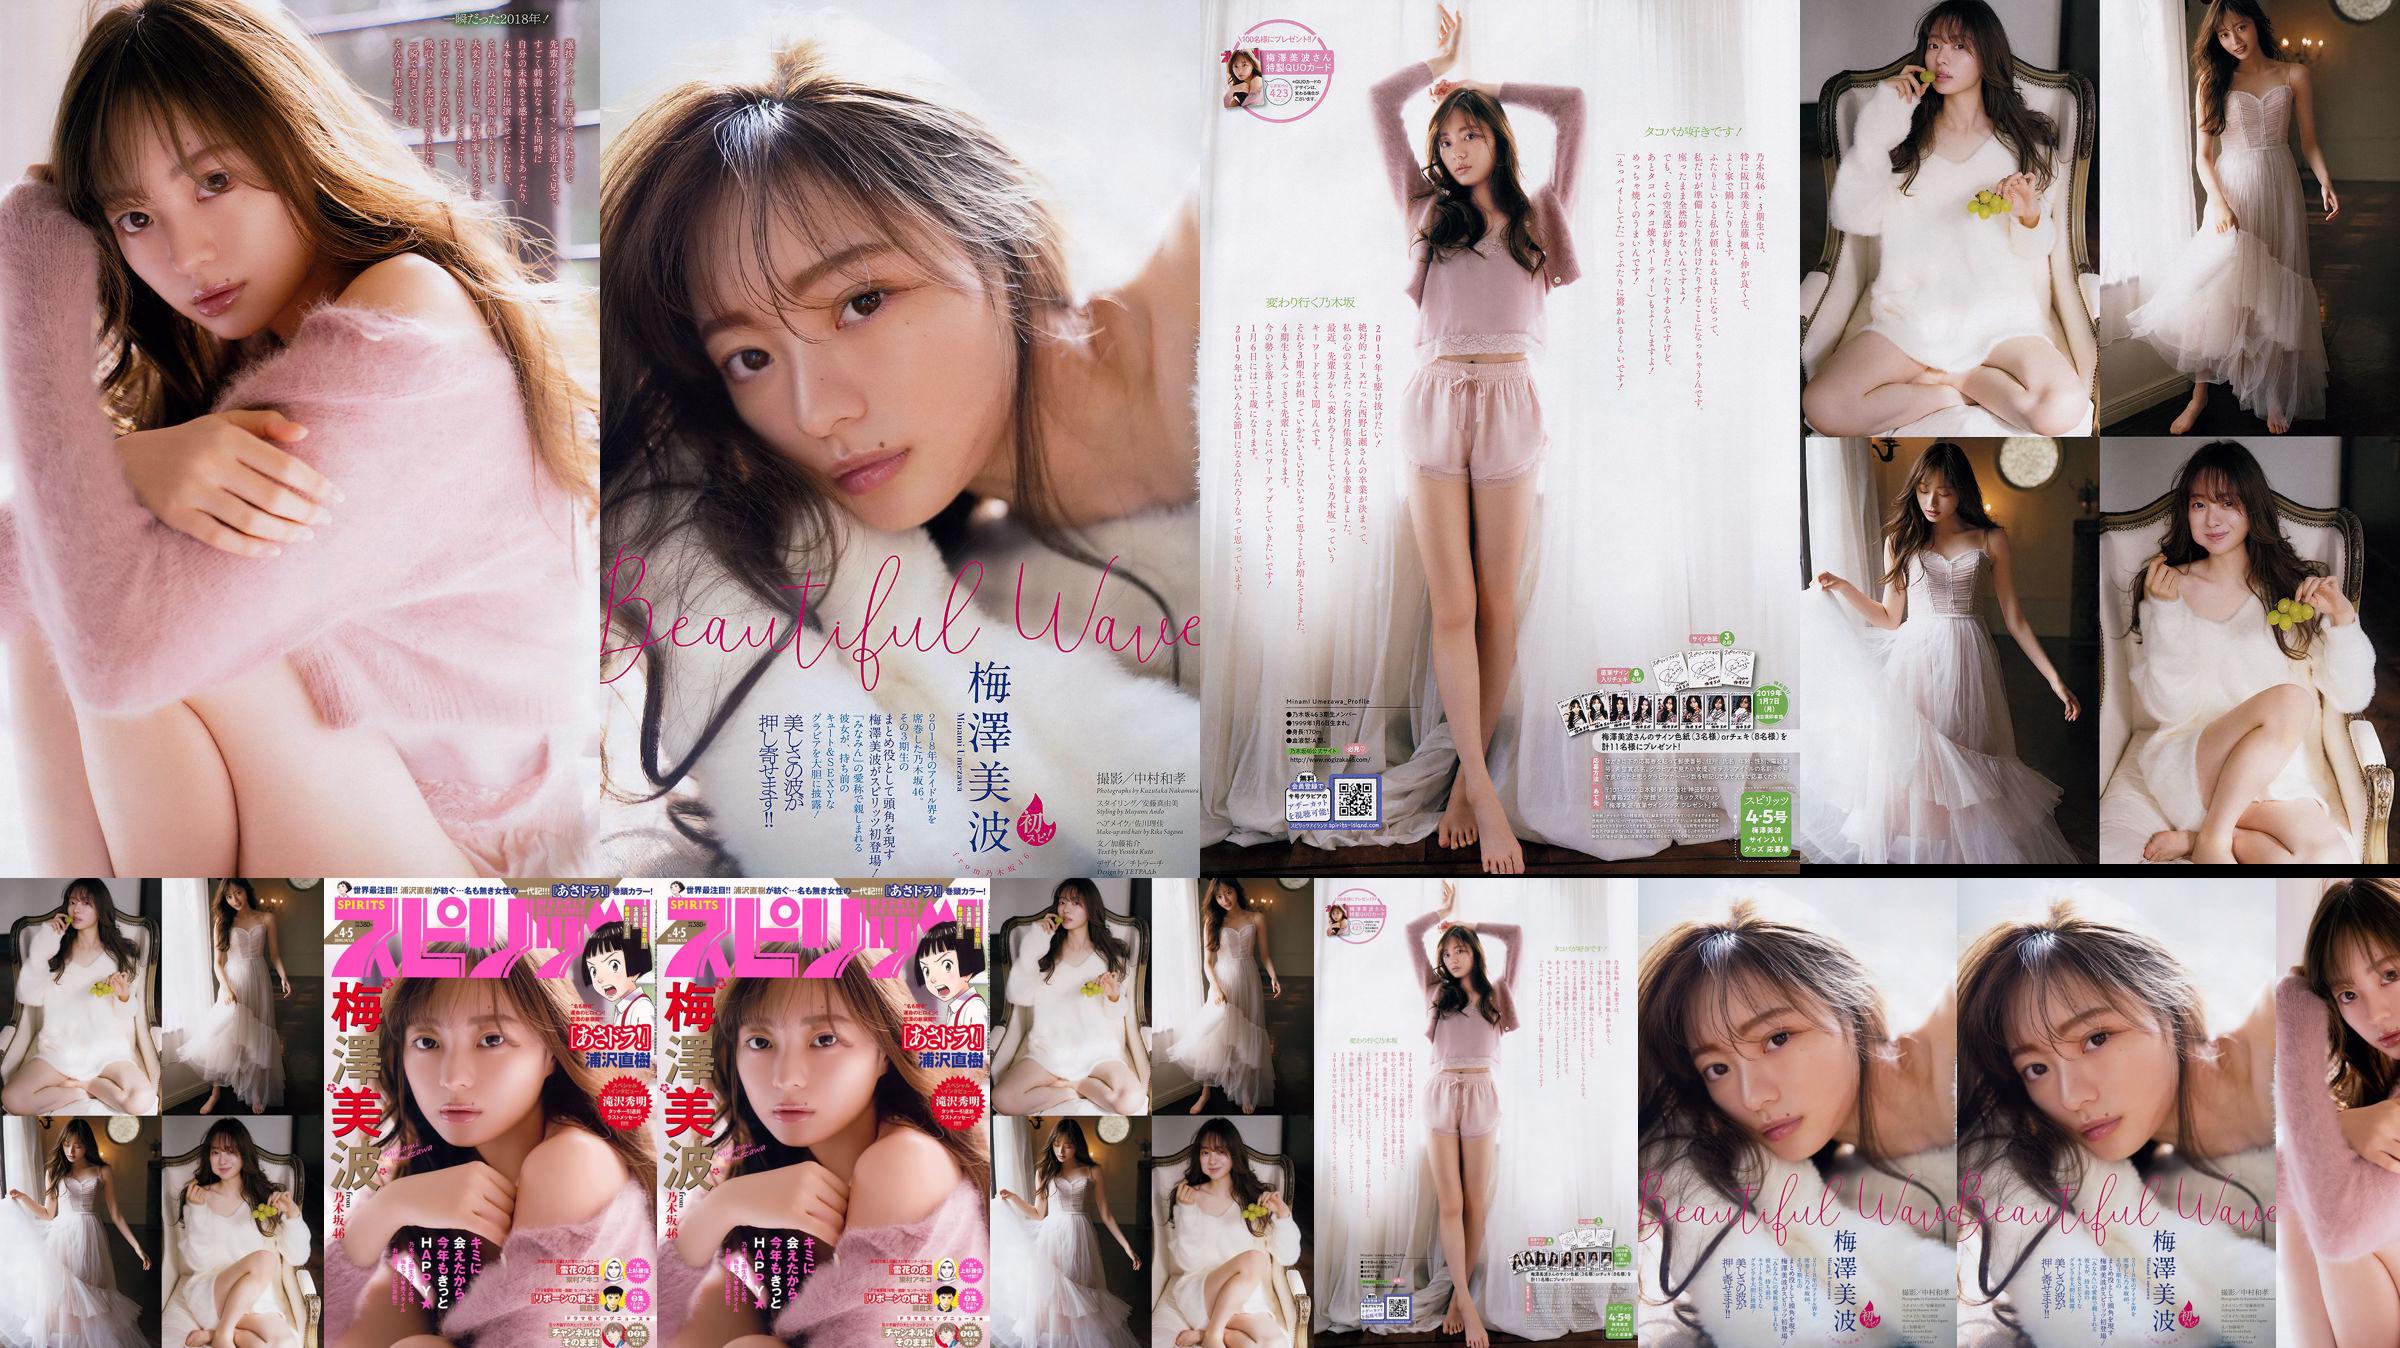 [Grands esprits de la bande dessinée hebdomadaire] Minami Umezawa 2019 N ° 04-05 Photo Magazine No.43c4c5 Page 1